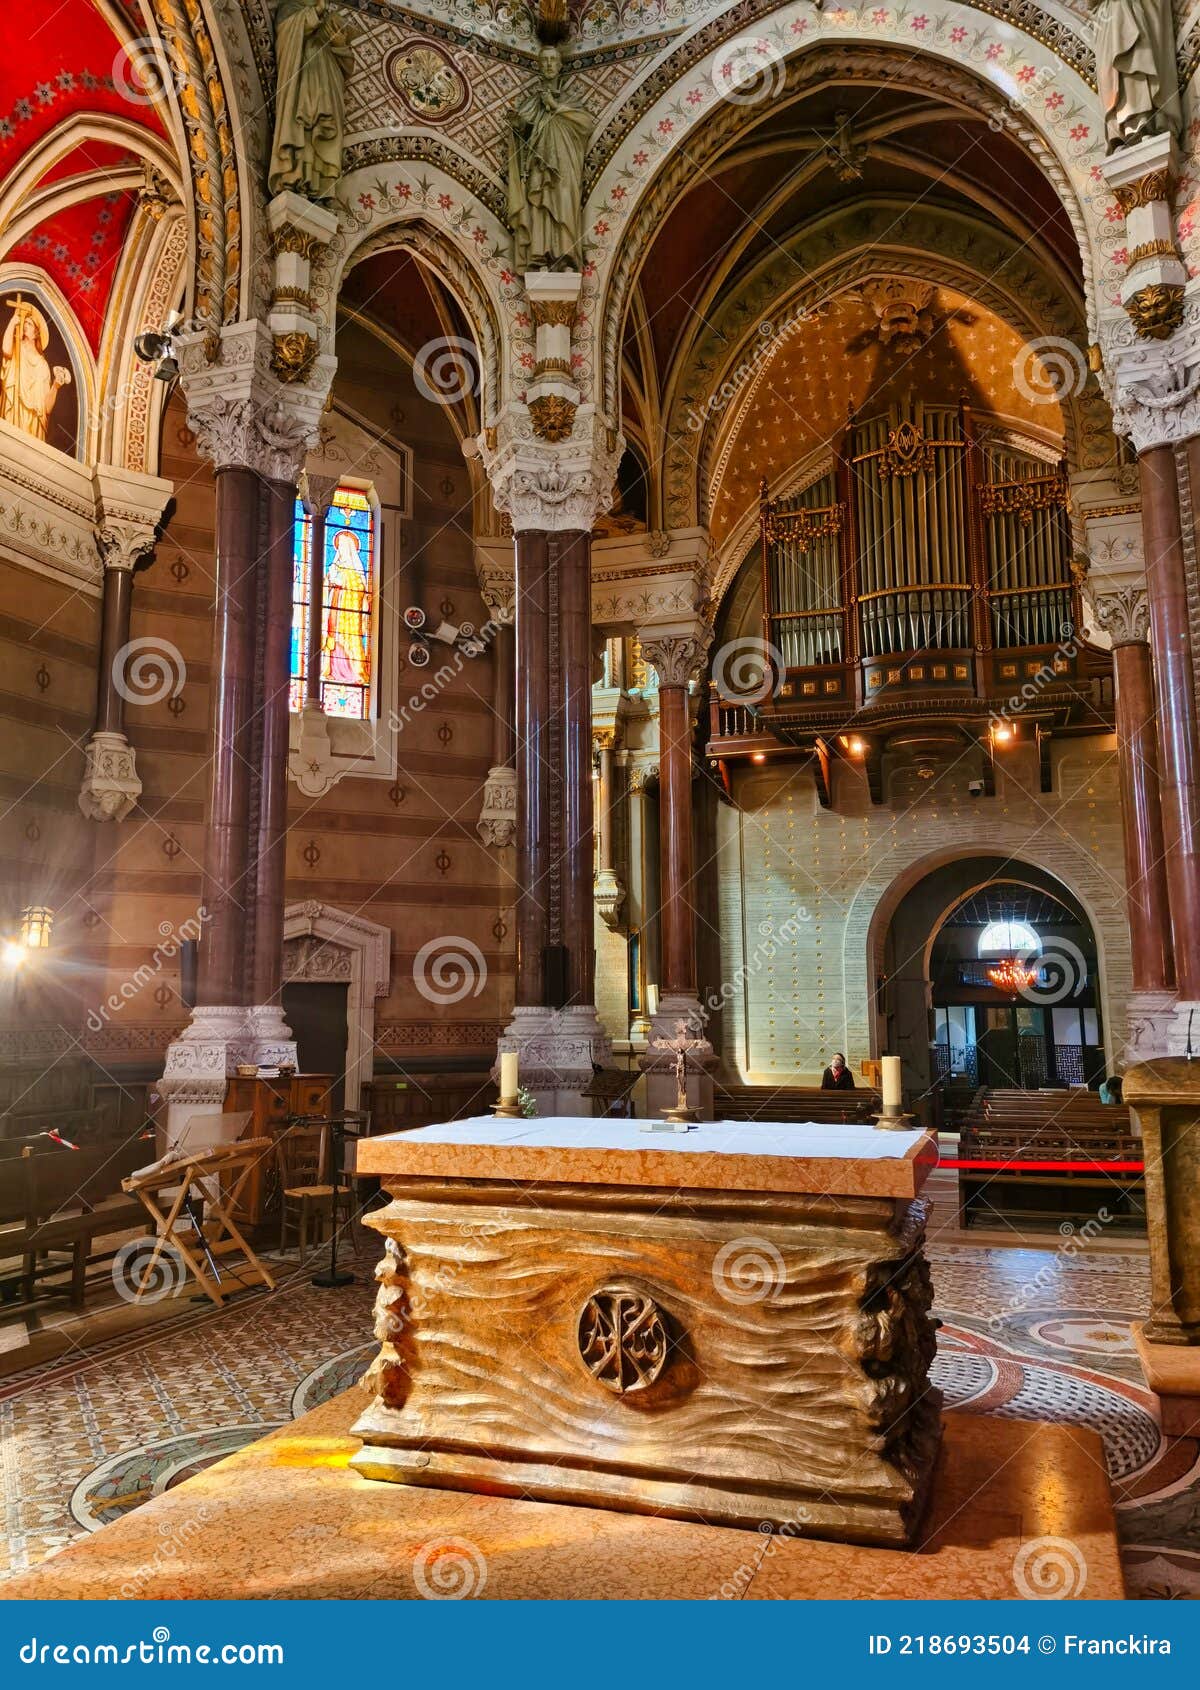 splendid interior of the basilica of ars-sur-formans, center of france.